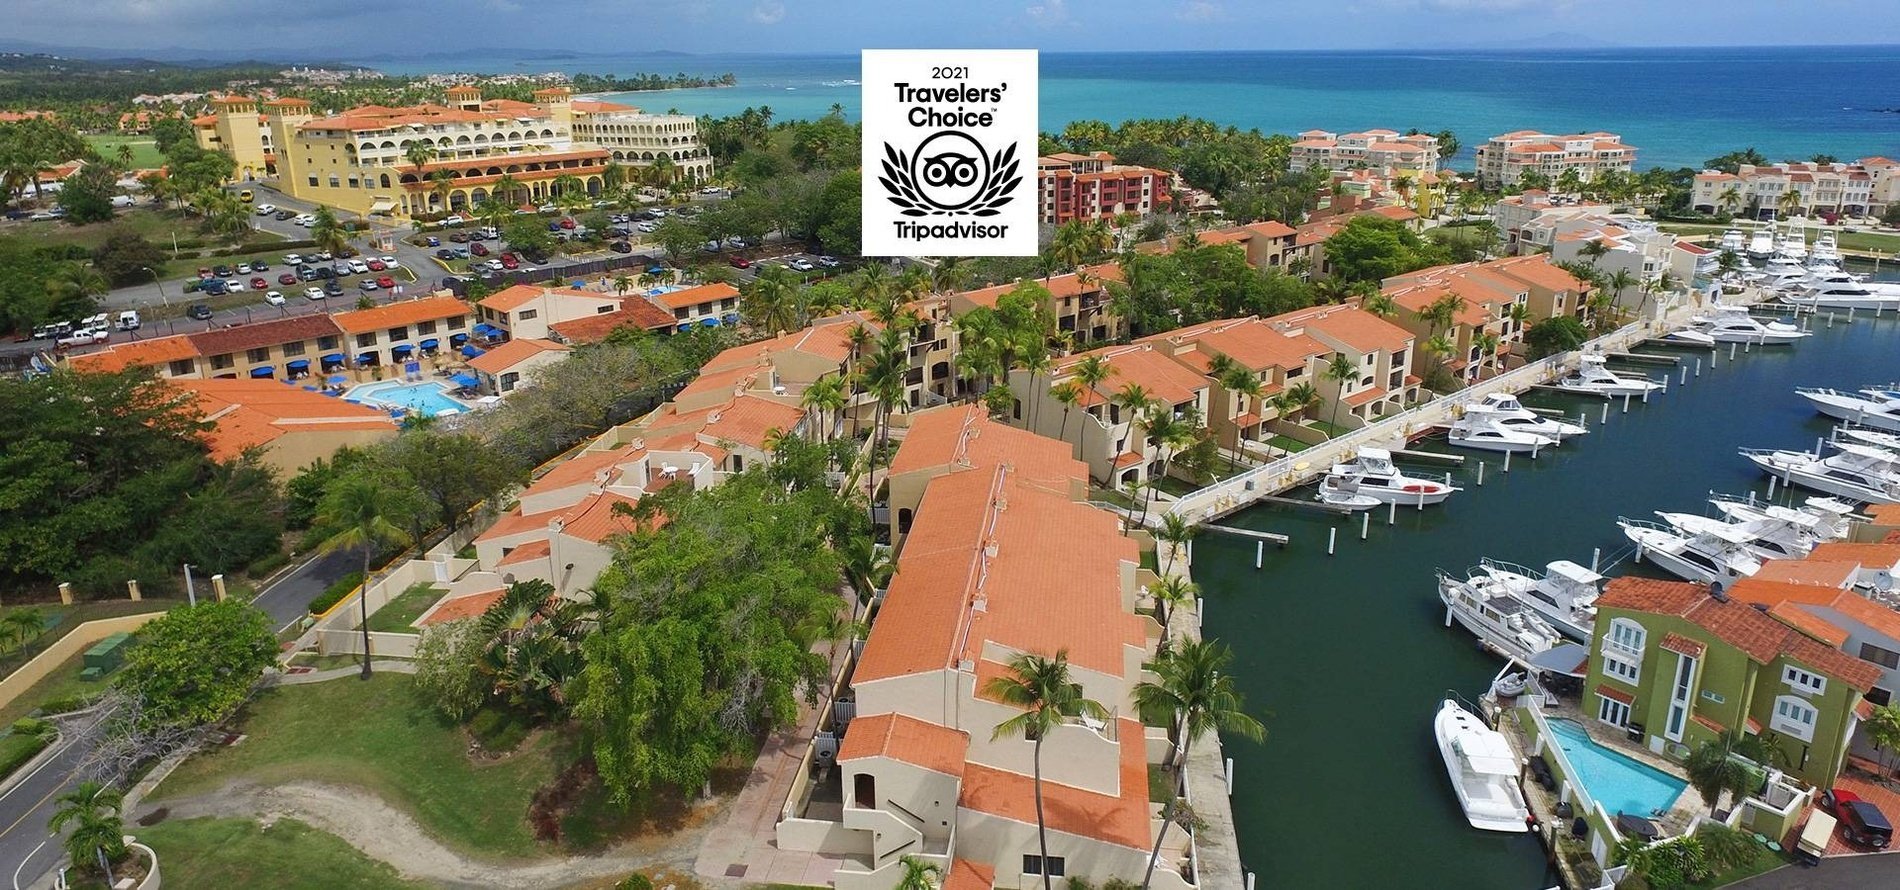 Premio Travelers Choice 2021 de TripAdvisor a Park Royal Hotels & Resorts Puerto Rico